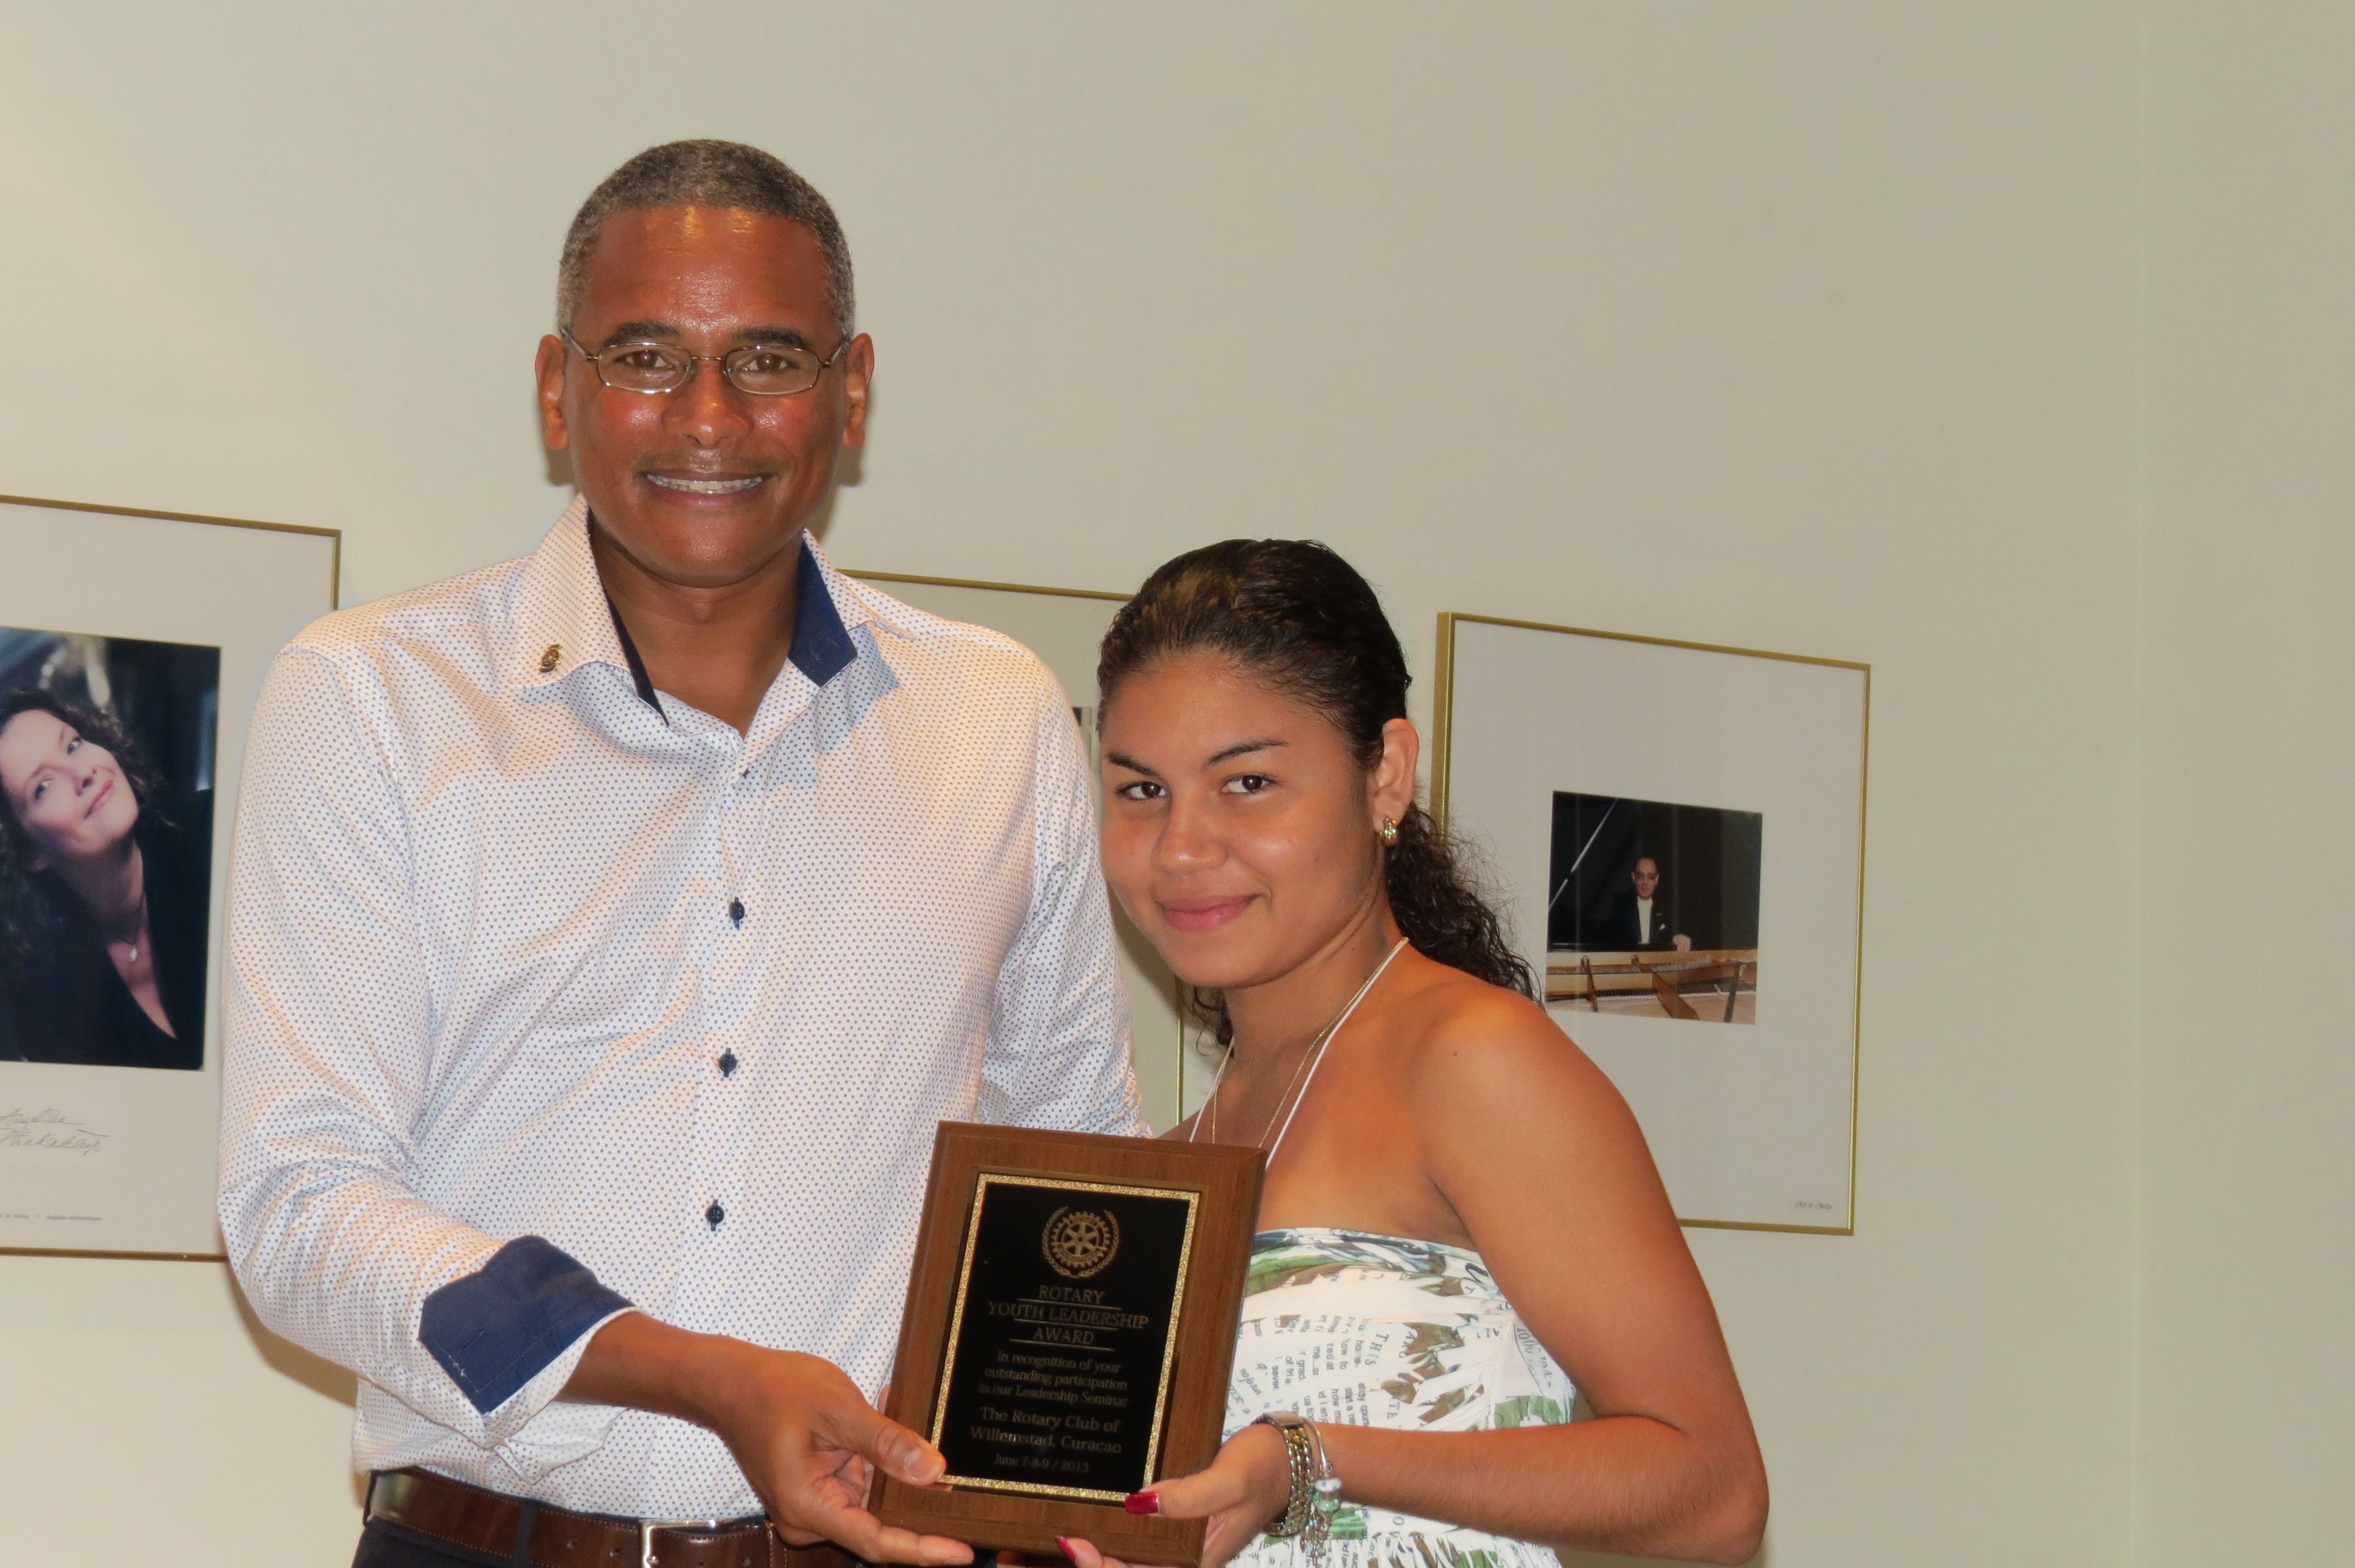 Lychellede Lannoy(18) van Kolegio Alejandro Paula wint de Rotary Youth Leadership Award 2013